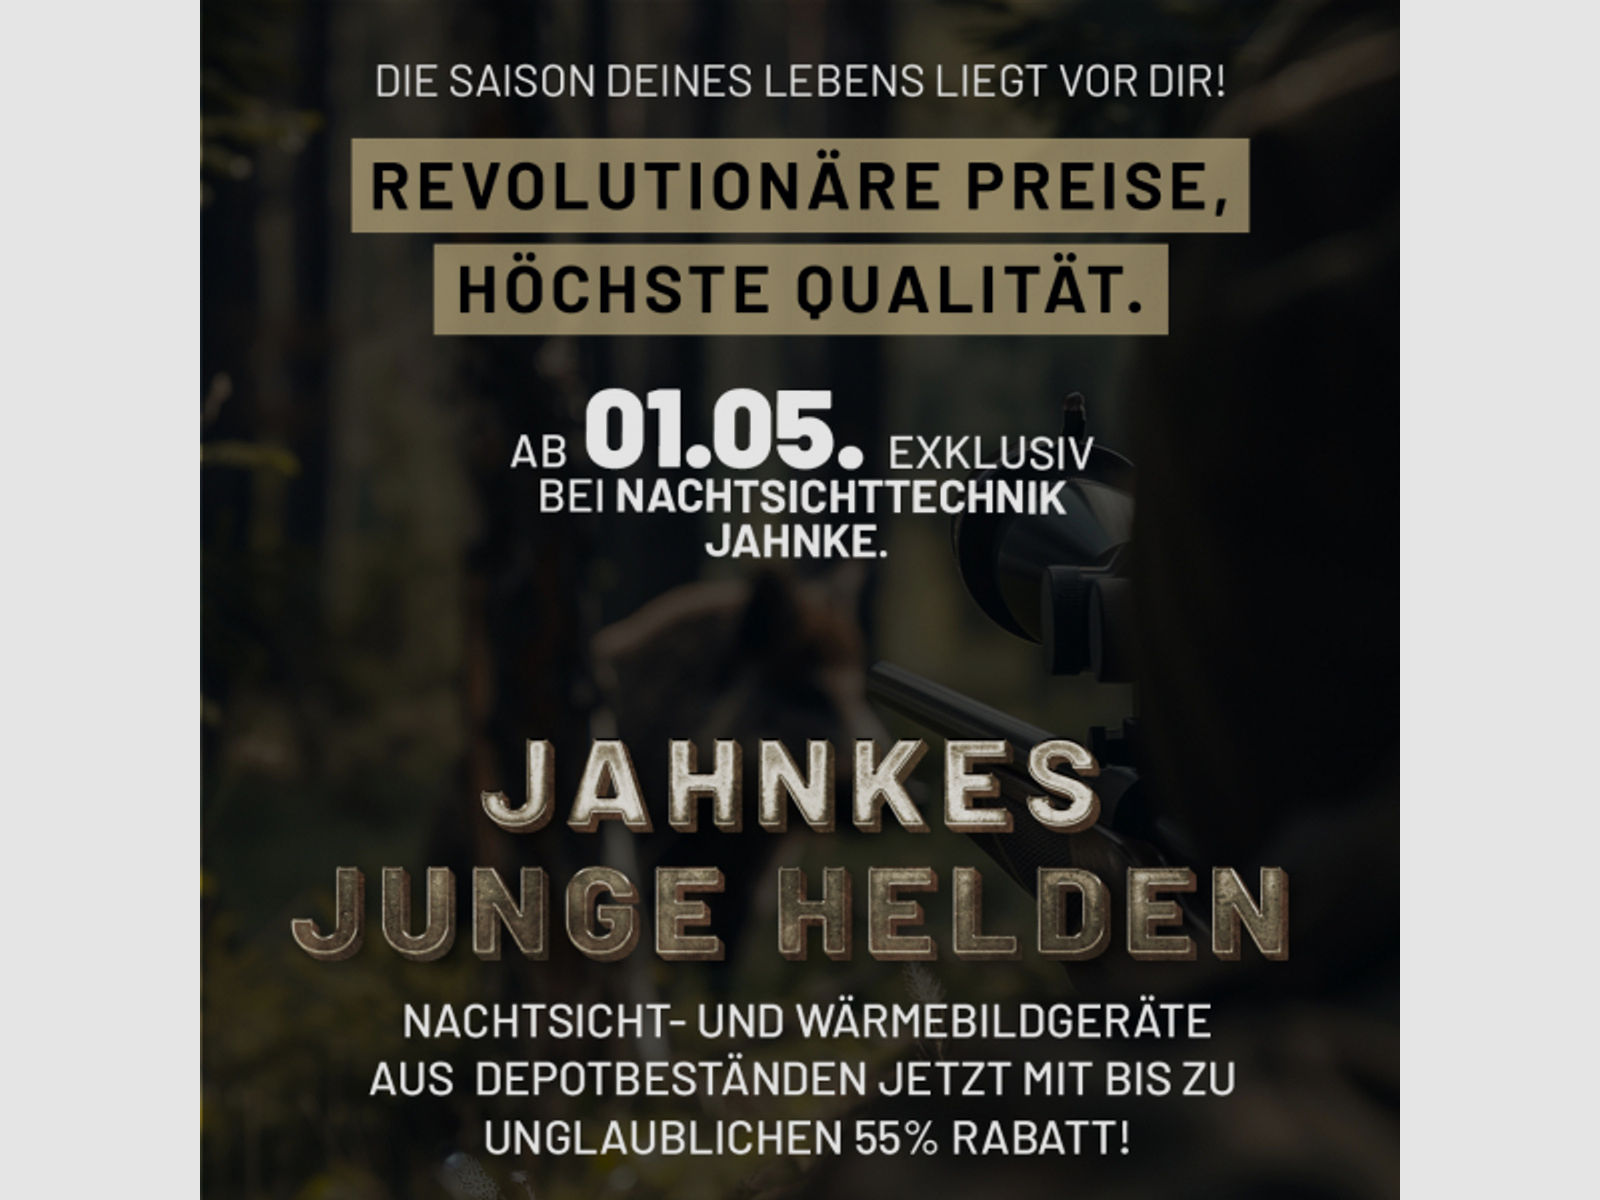 Nachtsichttechnik Jahnke DJ-8 5x58 JJH LK 3 S 1, Jahnke Monochrom (Grau)